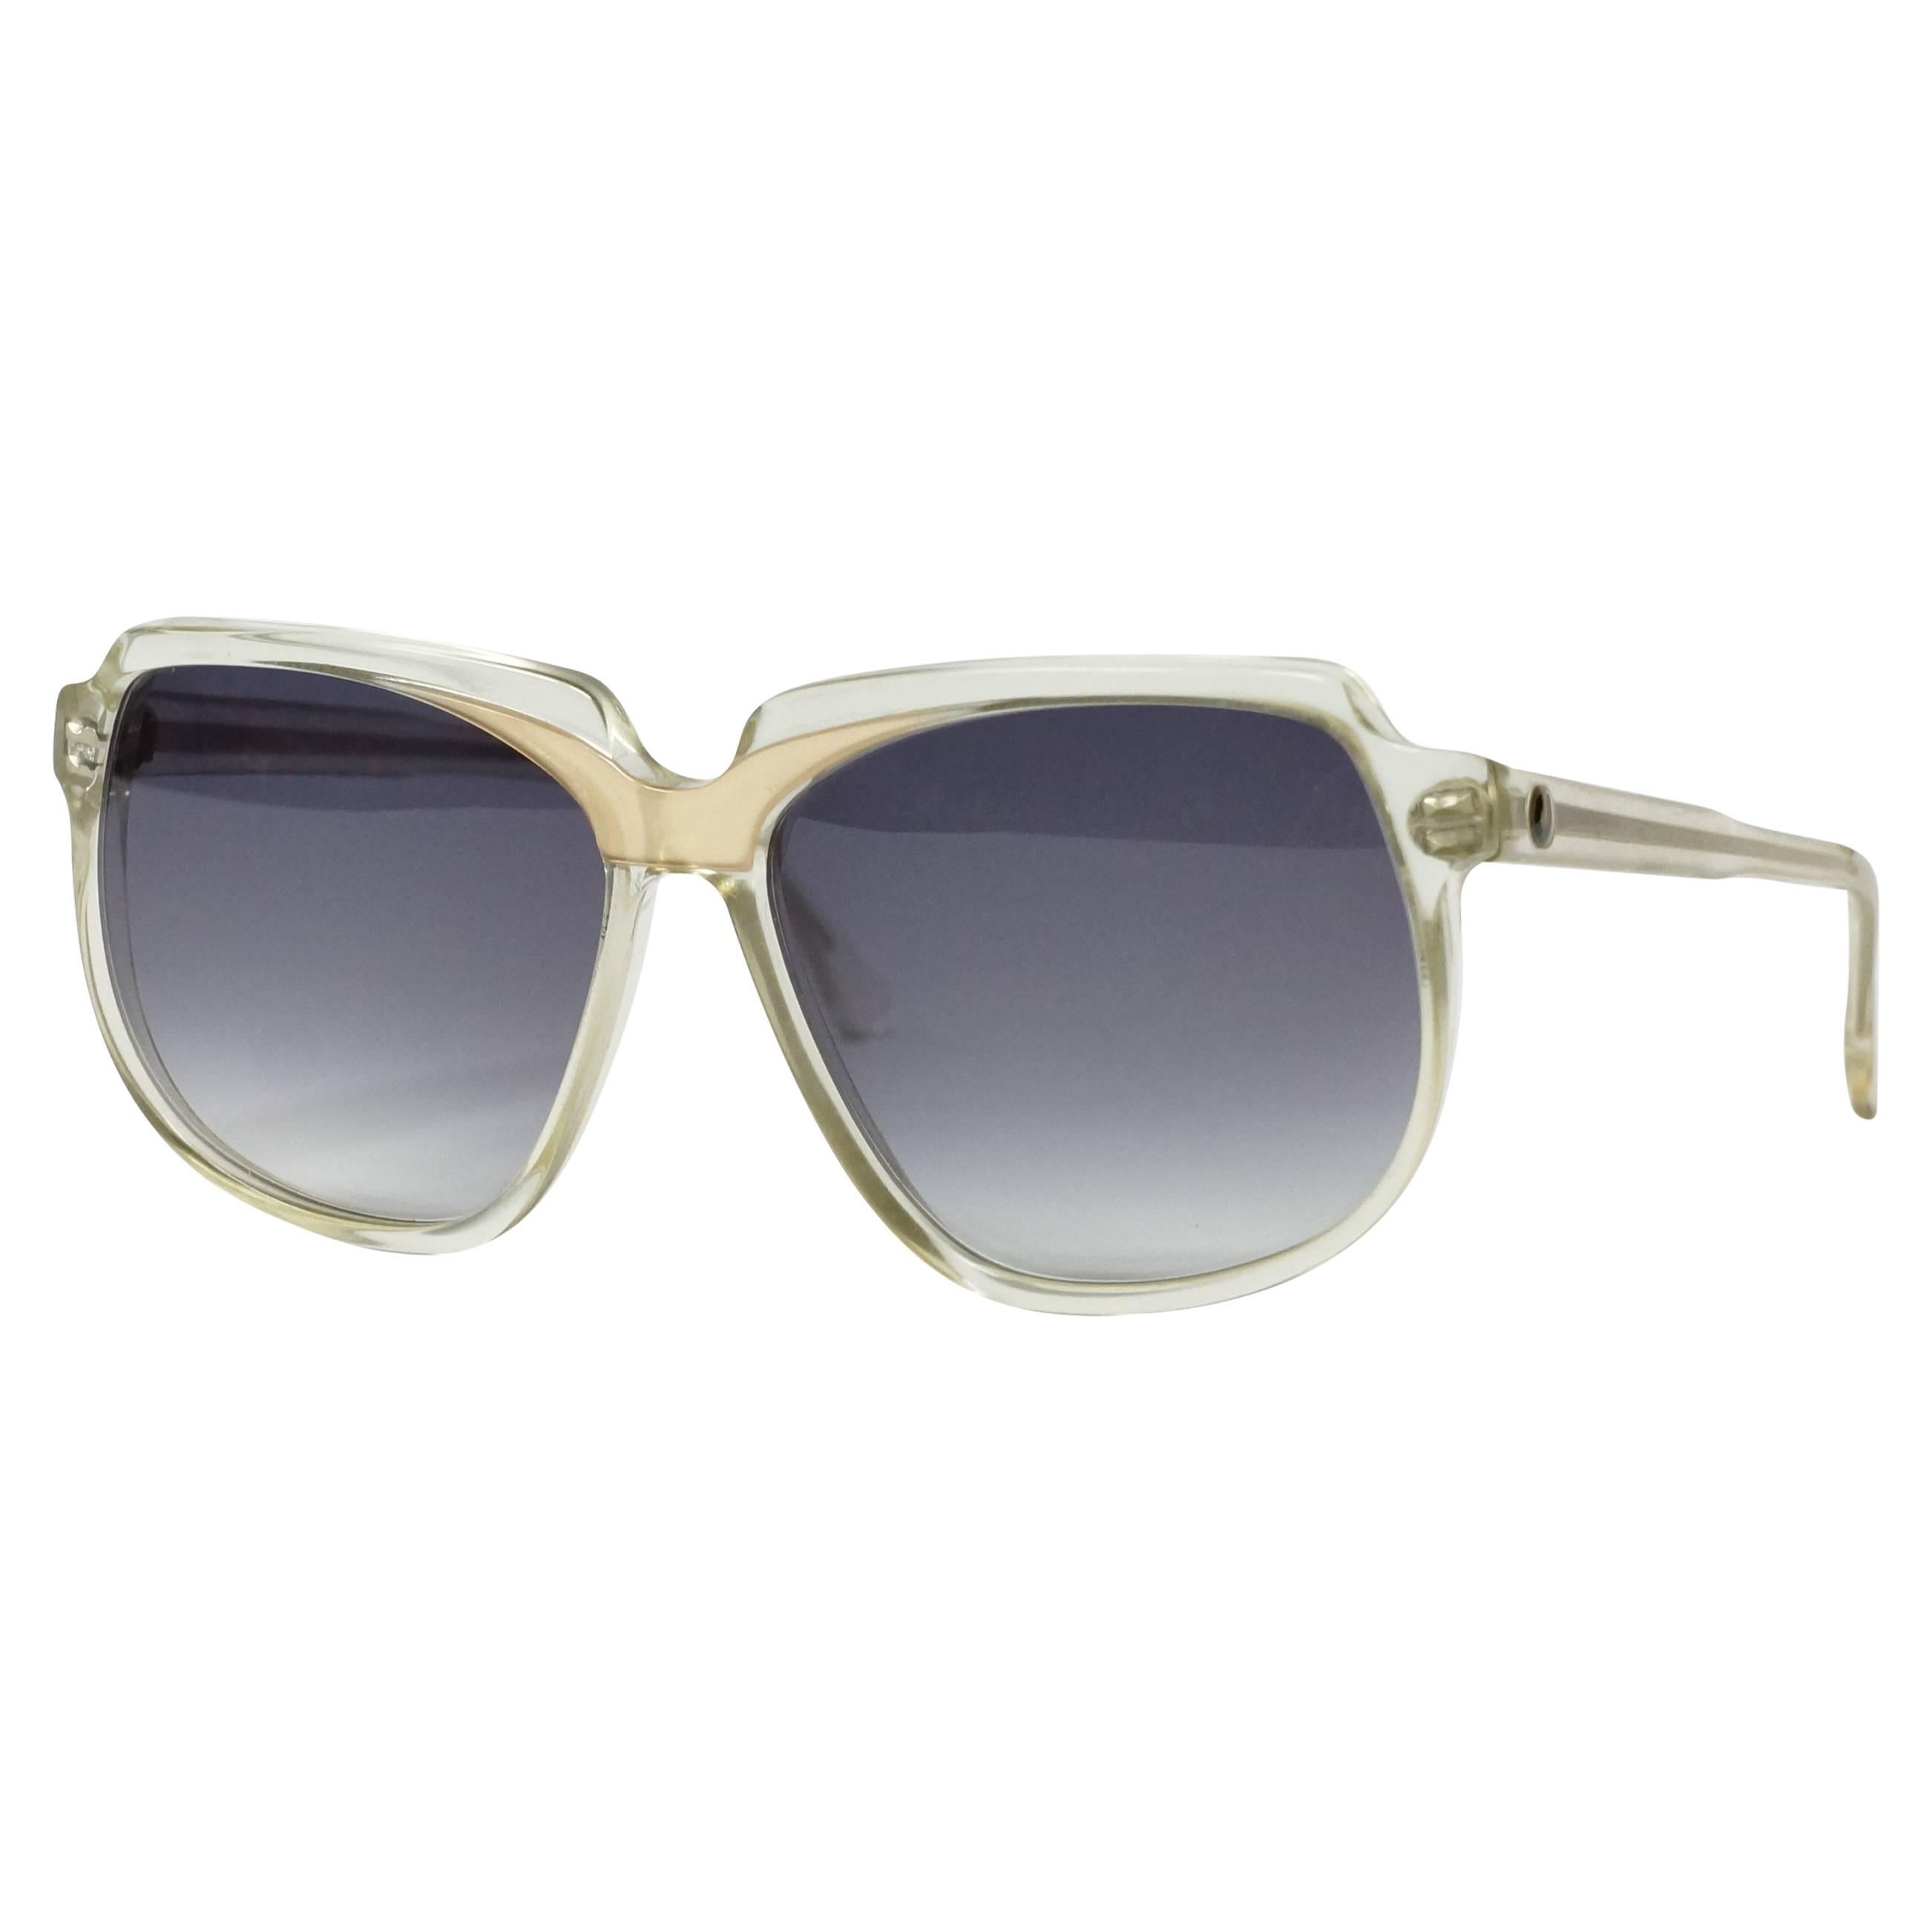 1980s Charles Jourdan Clear Vintage Sunglasses model CJ13 For Sale